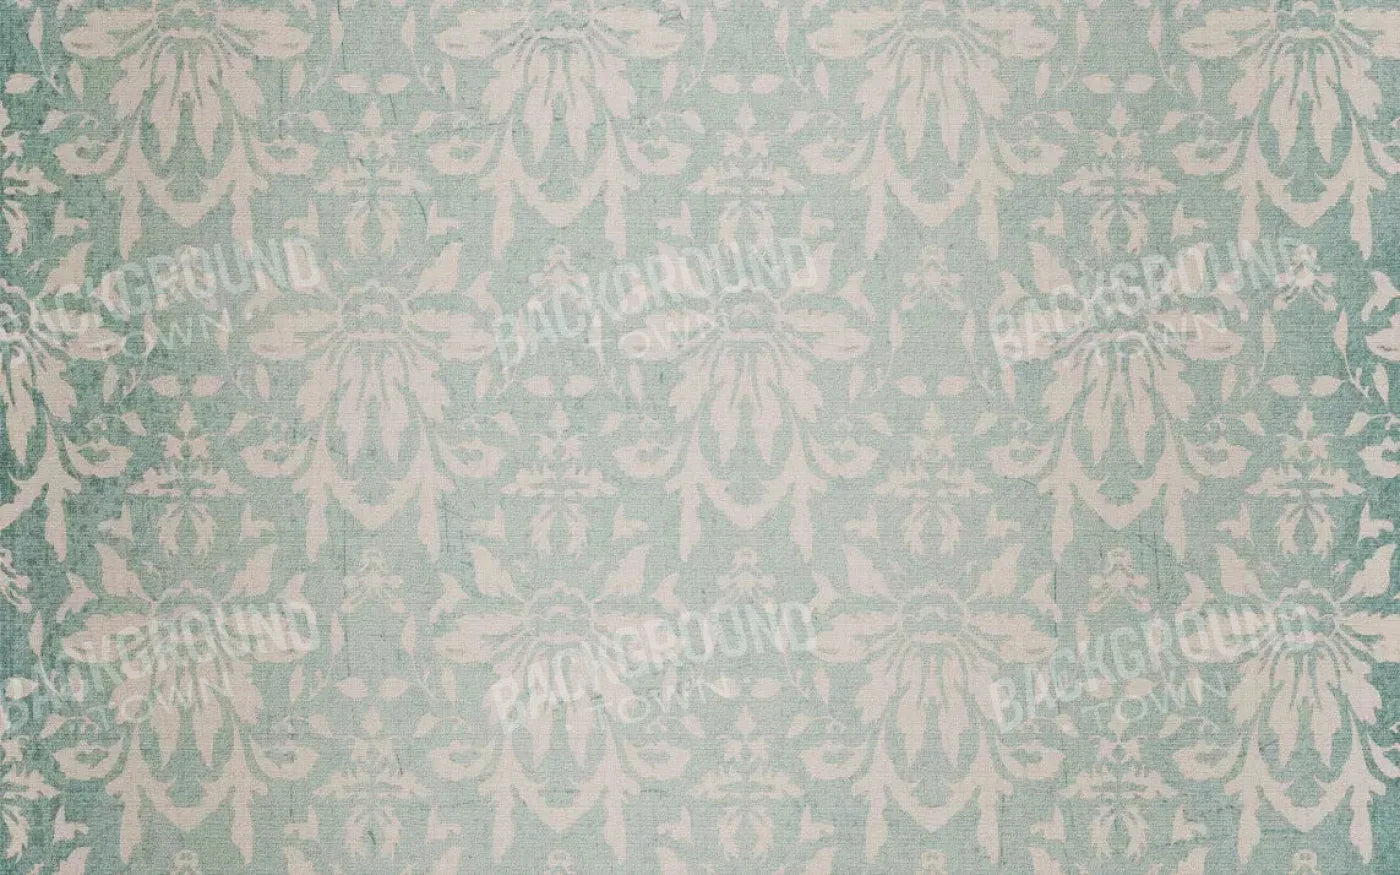 Teal Love9 14X9 Ultracloth ( 168 X 108 Inch ) Backdrop